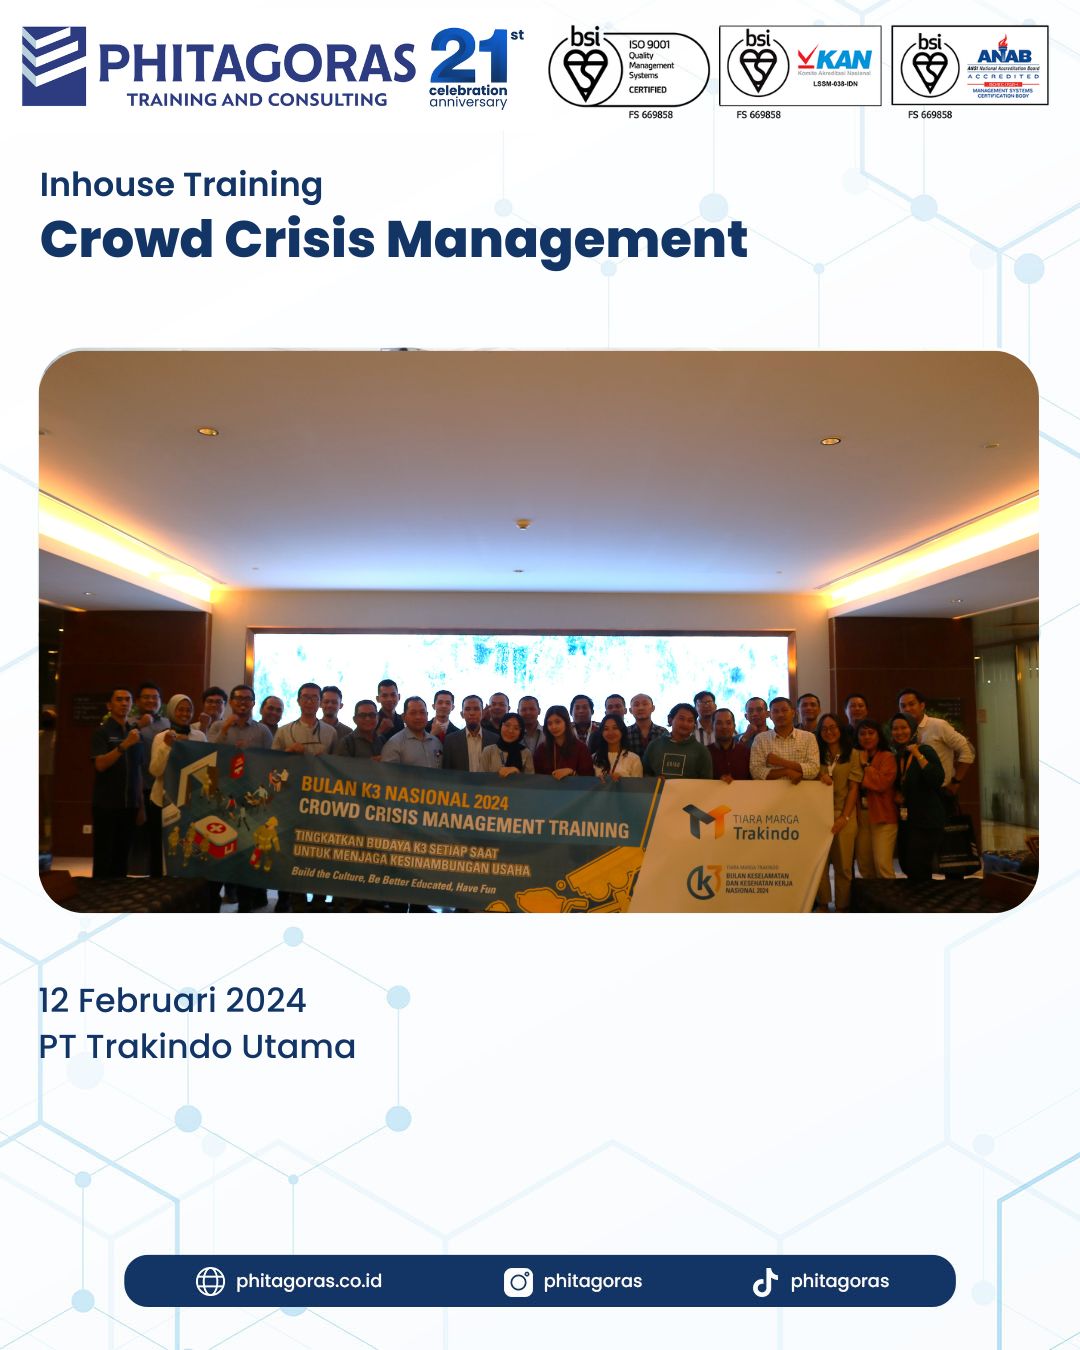 Inhouse Training Crowd Crisis Management - PT Trakindo Utama